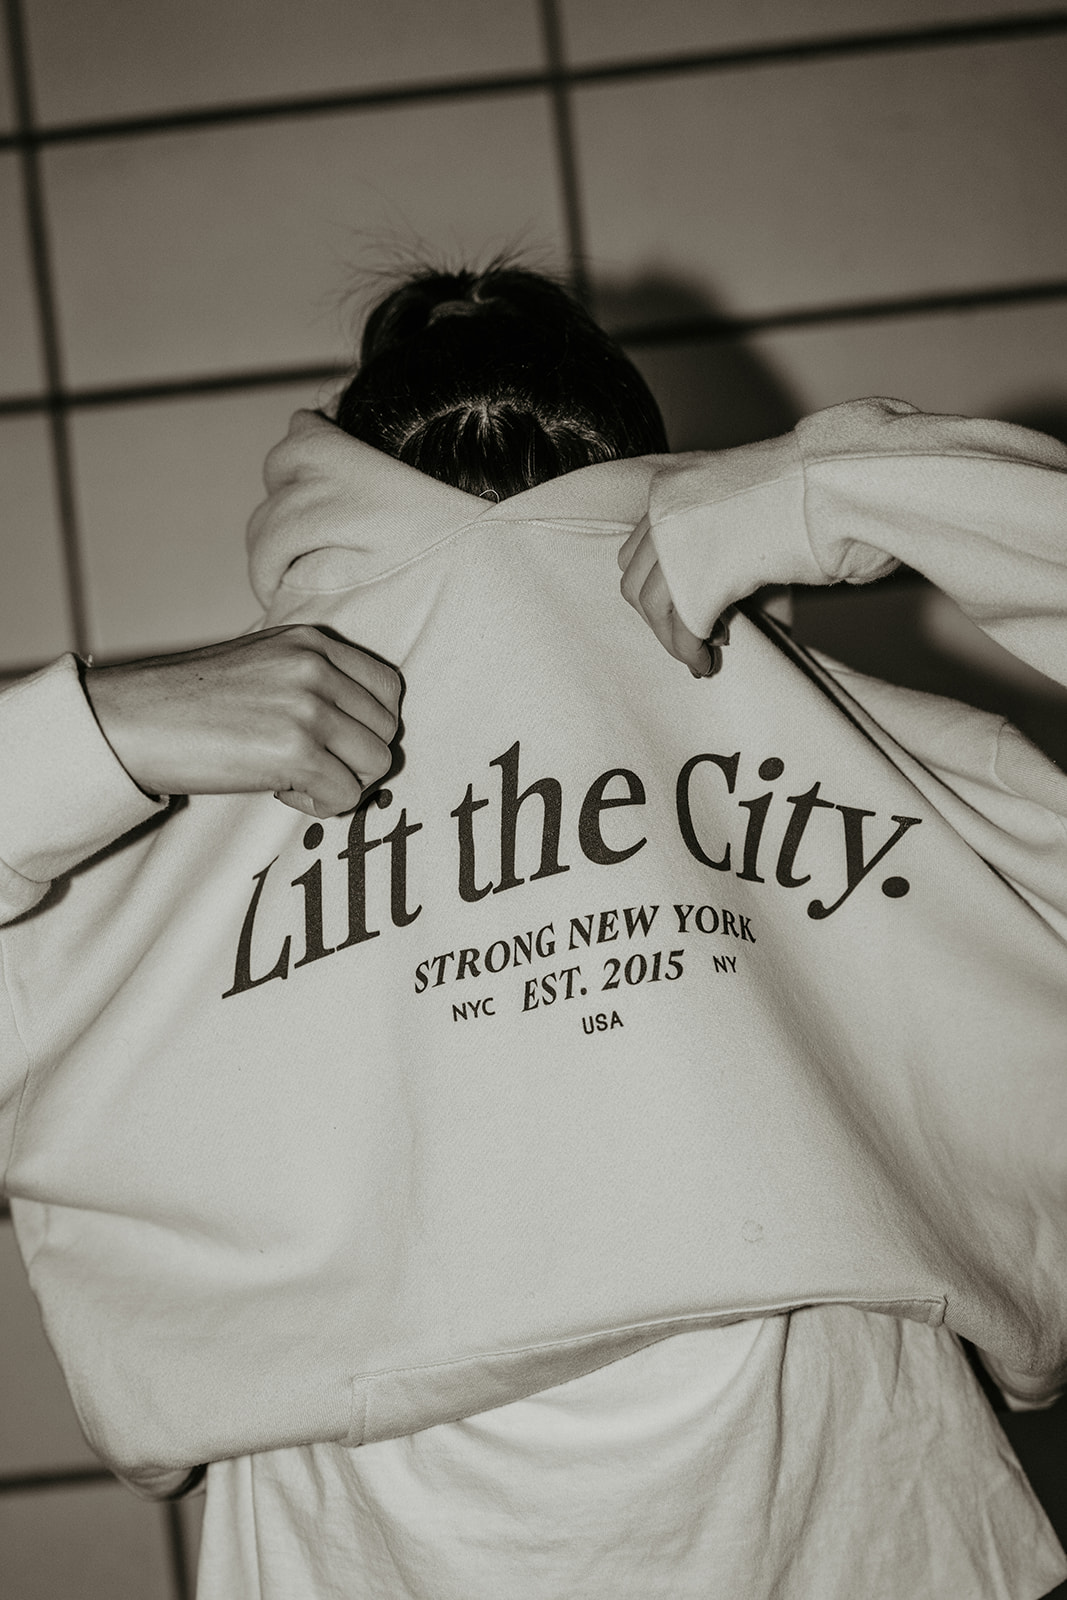 Lift the City.